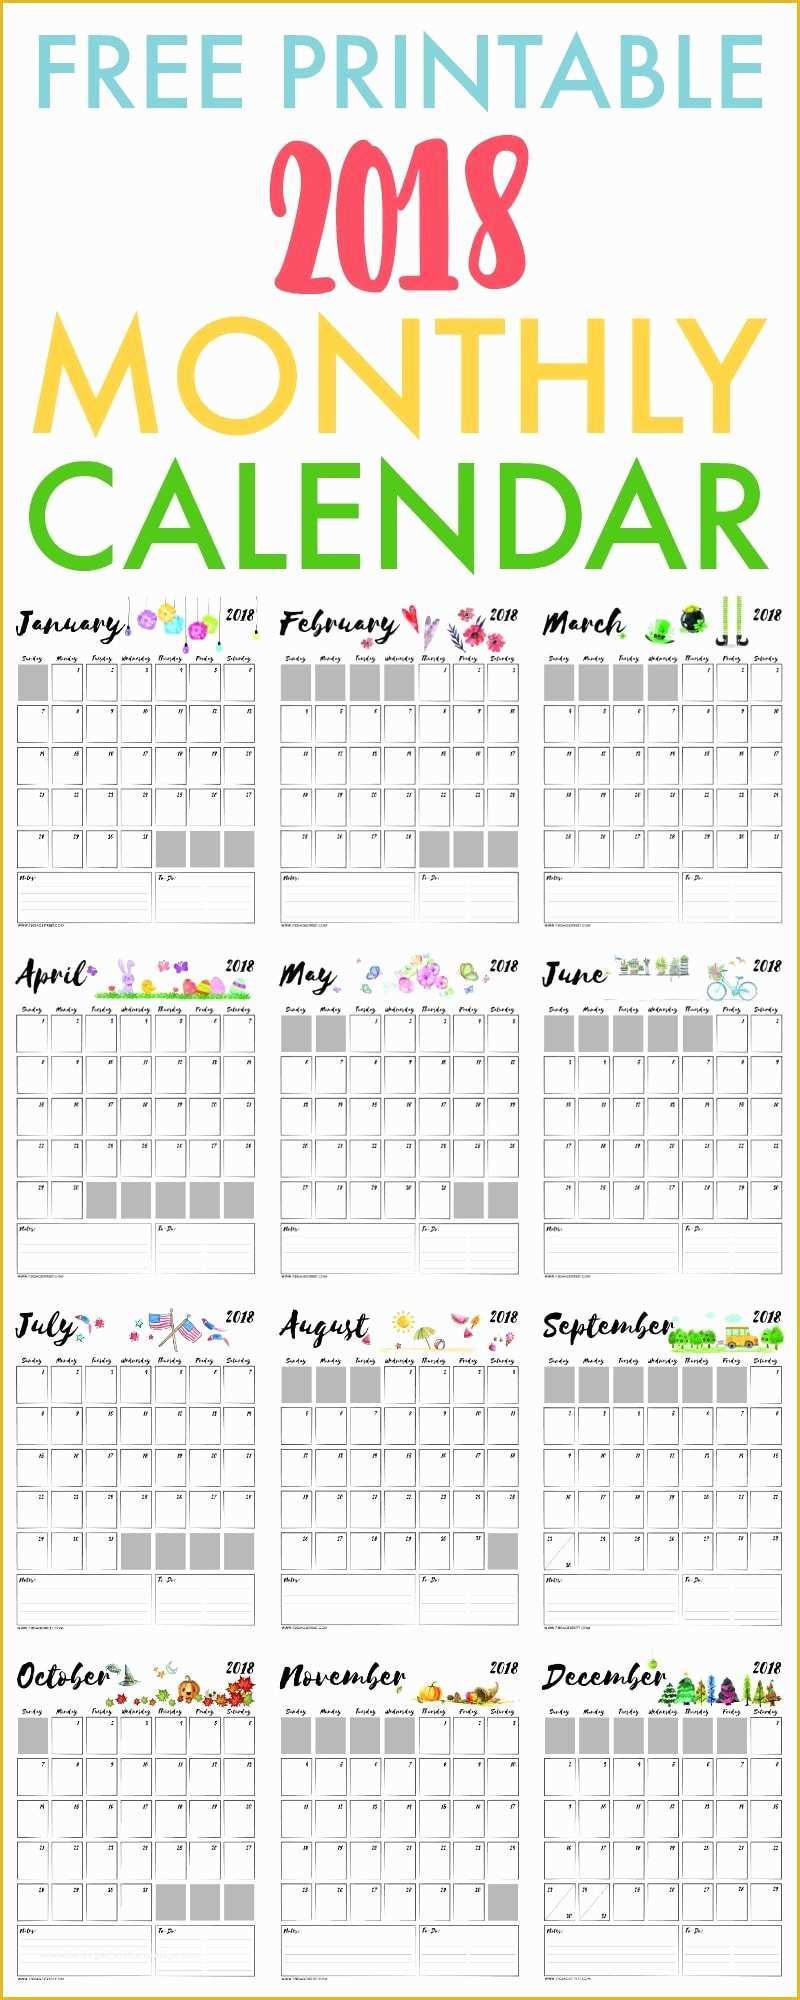 Calendar Template Free 2018 Of Free Printable Calendar 2018 Free Pdf Monthly Calendar